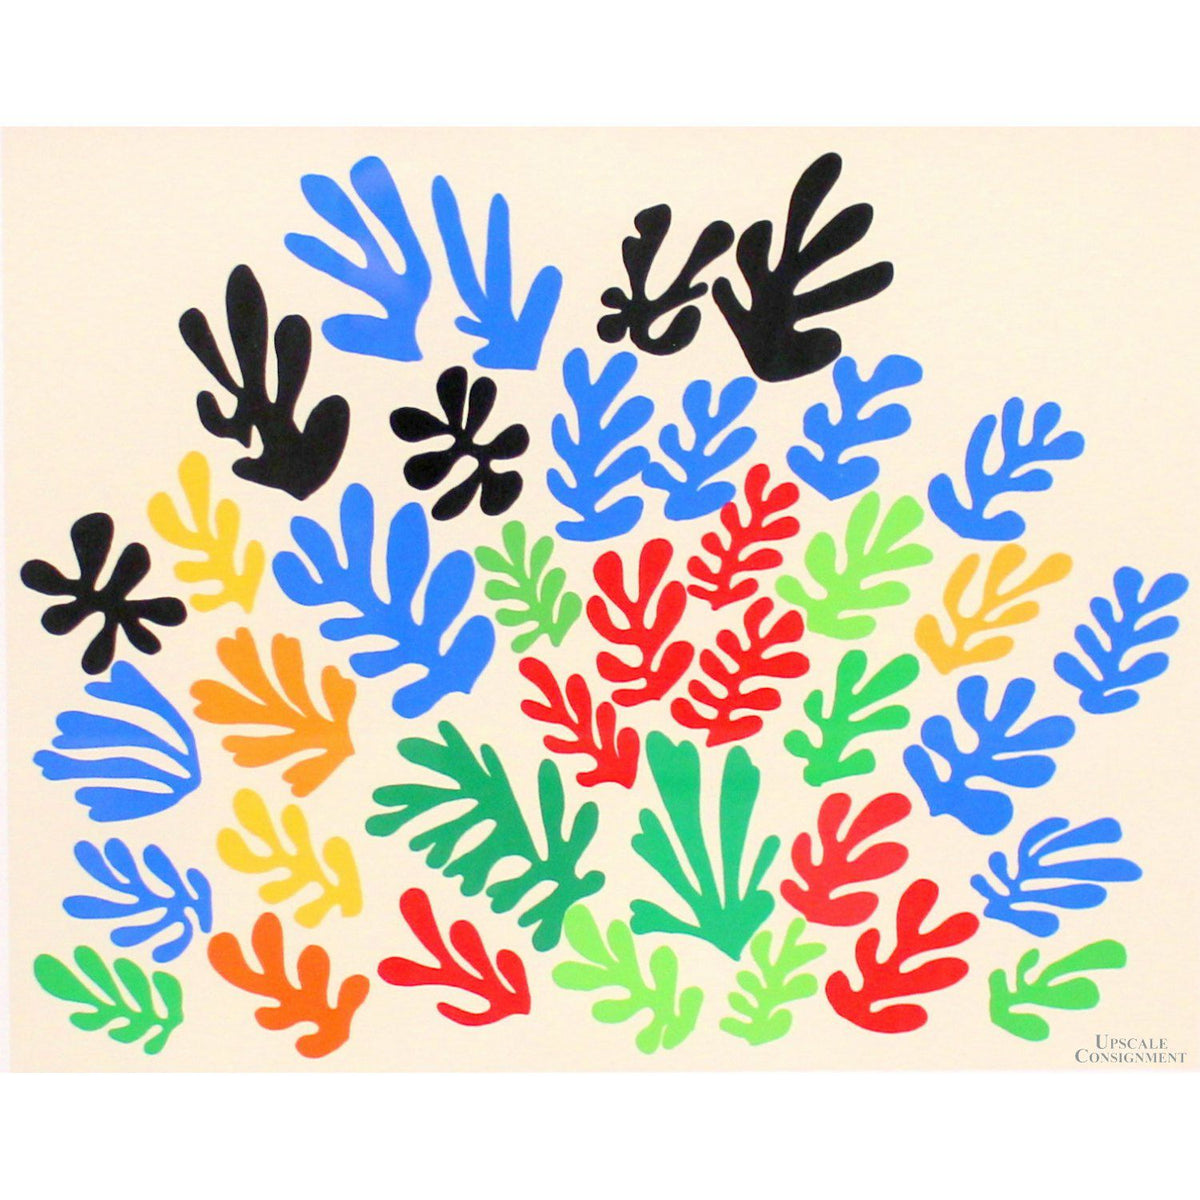 "La Gerbe" by Henri Matisse